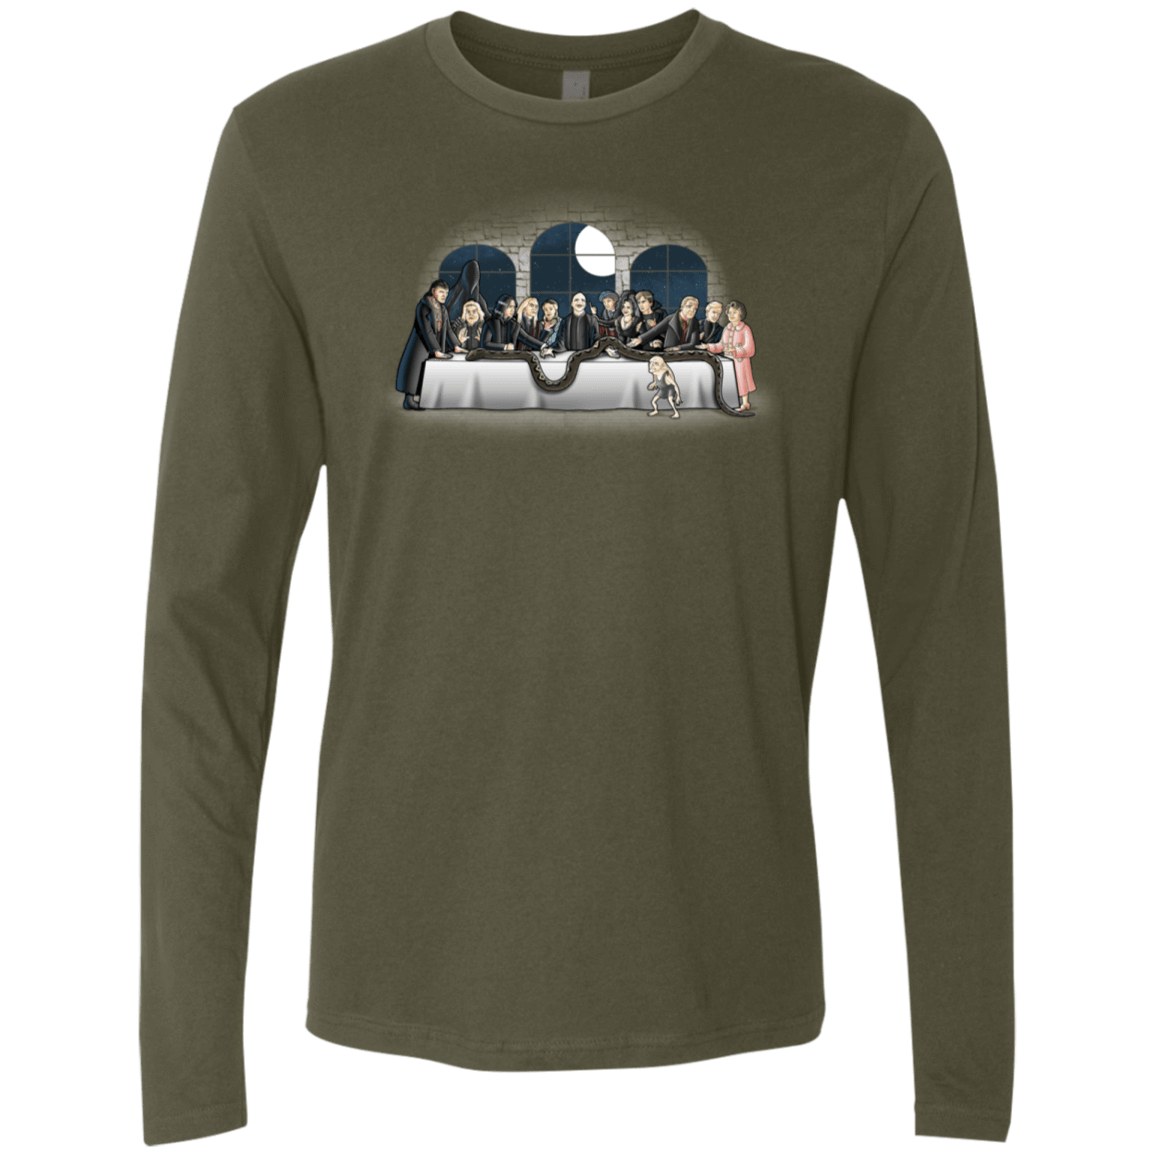 T-Shirts Military Green / S Bad Magic Dinner Men's Premium Long Sleeve